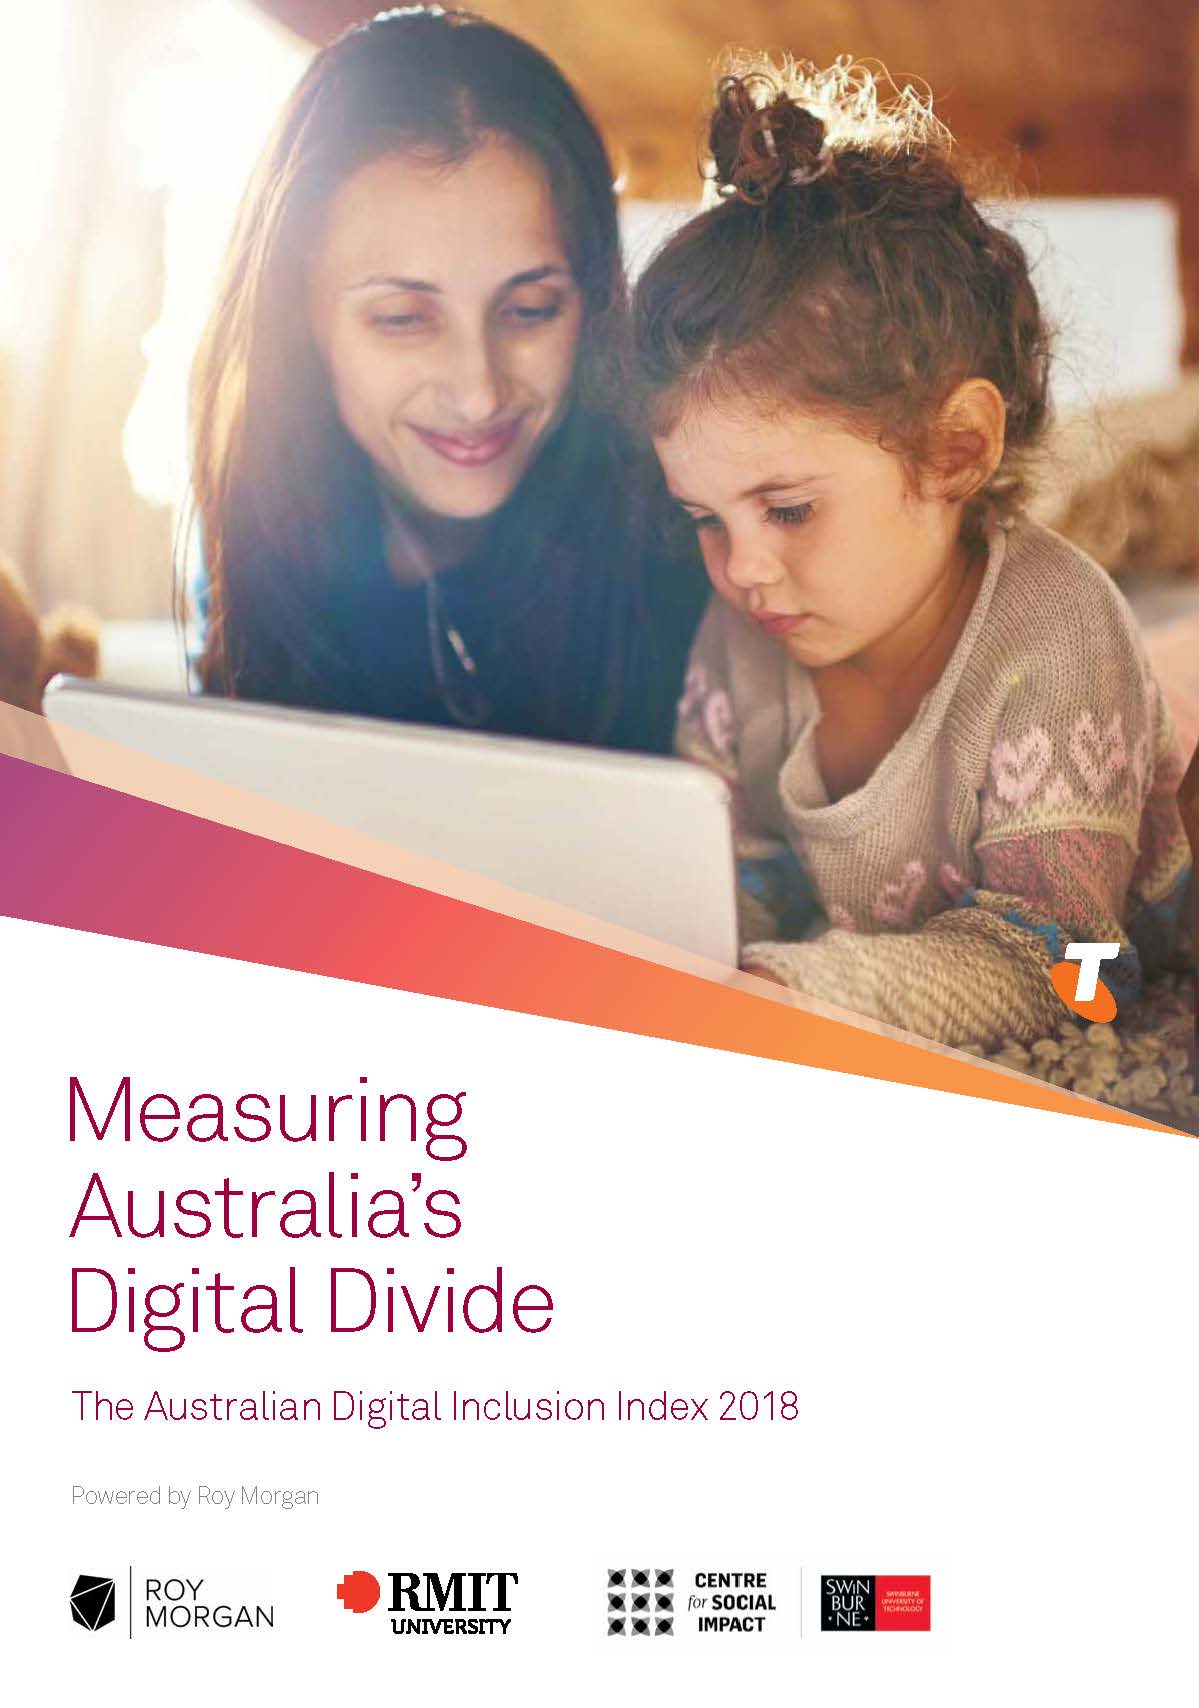 The 2018 Australian Digital Inclusion Index report